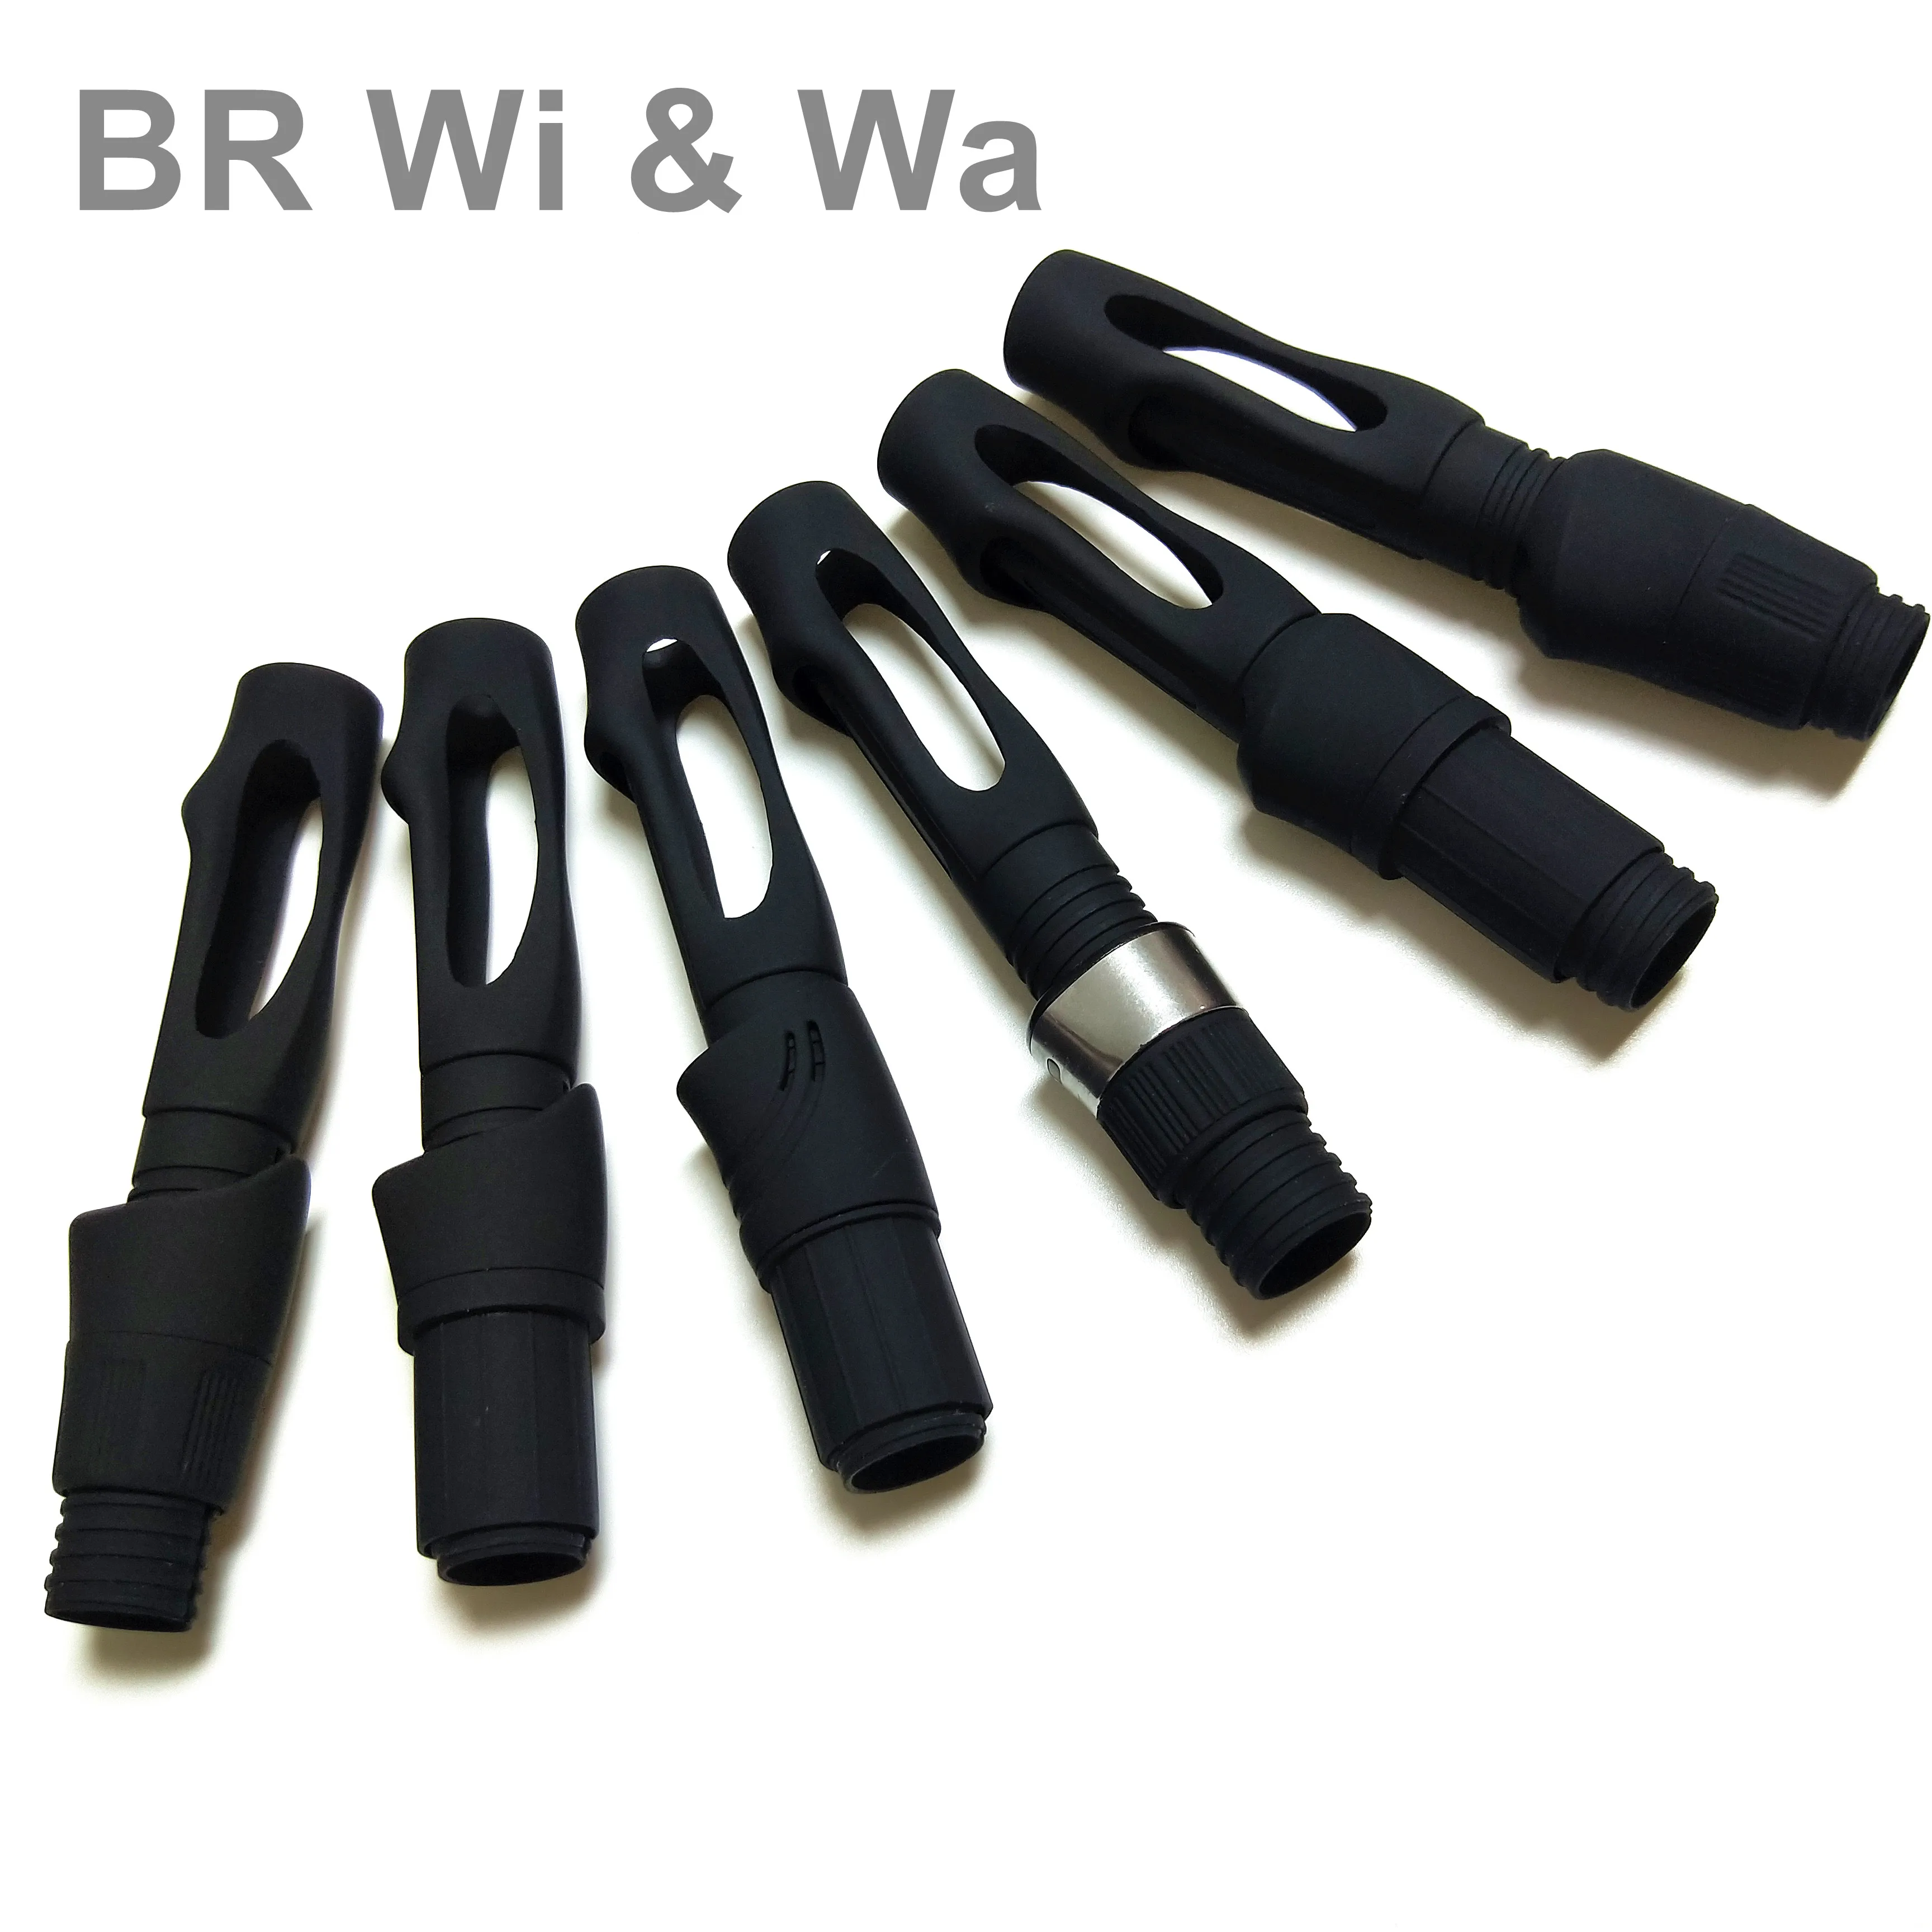 

BR Wi&Wa OVS reel seat Non-slip Matte Black Super Smooth, Super Sear-resistant Reel Reat Size16 DIY reel seat repair fishing rod